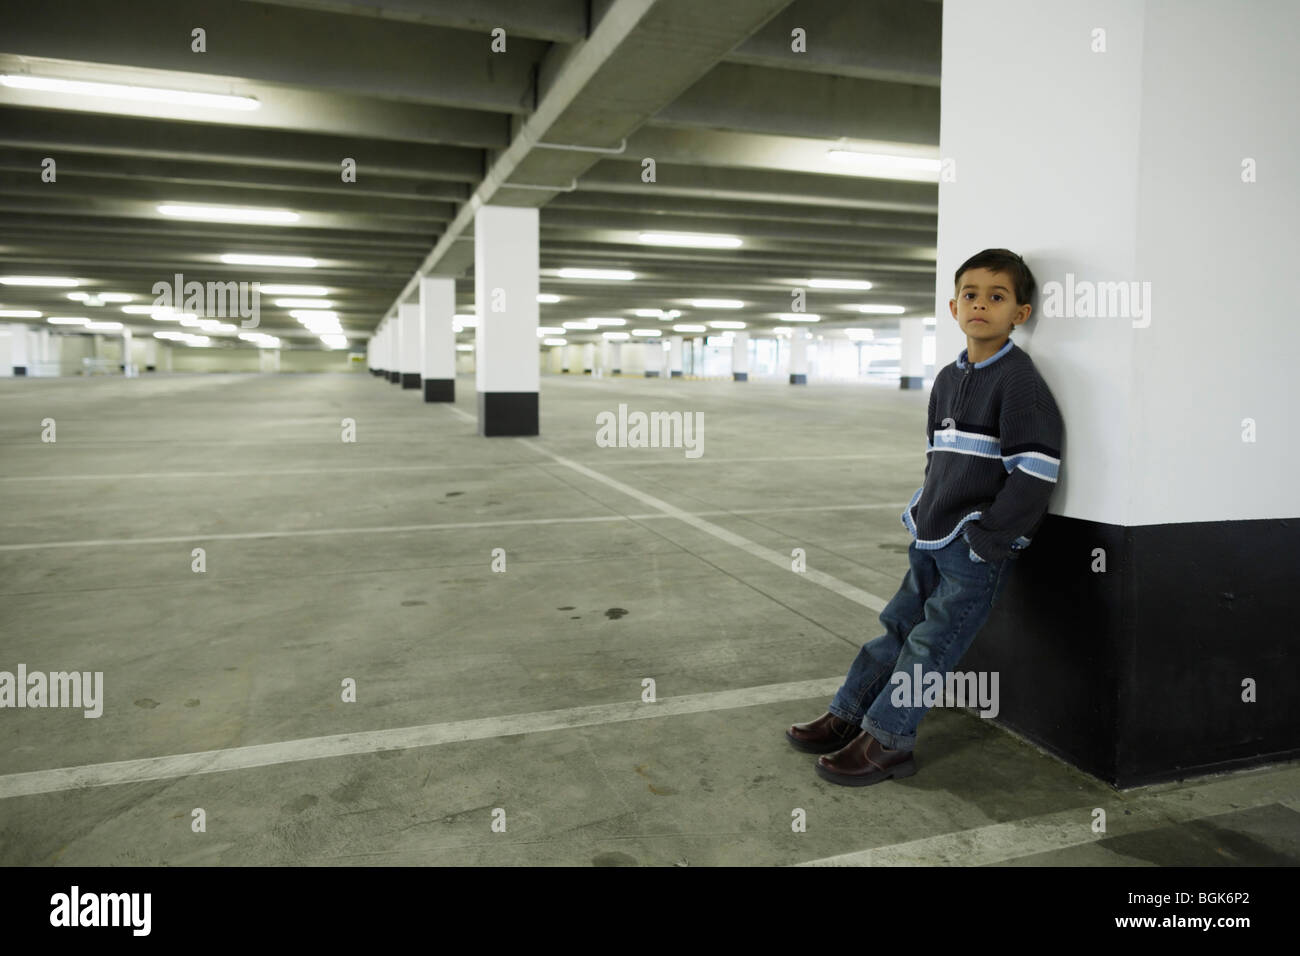 Junge lehnt sich gegen Betonpfeiler in leeren Parkplatz Stockfoto